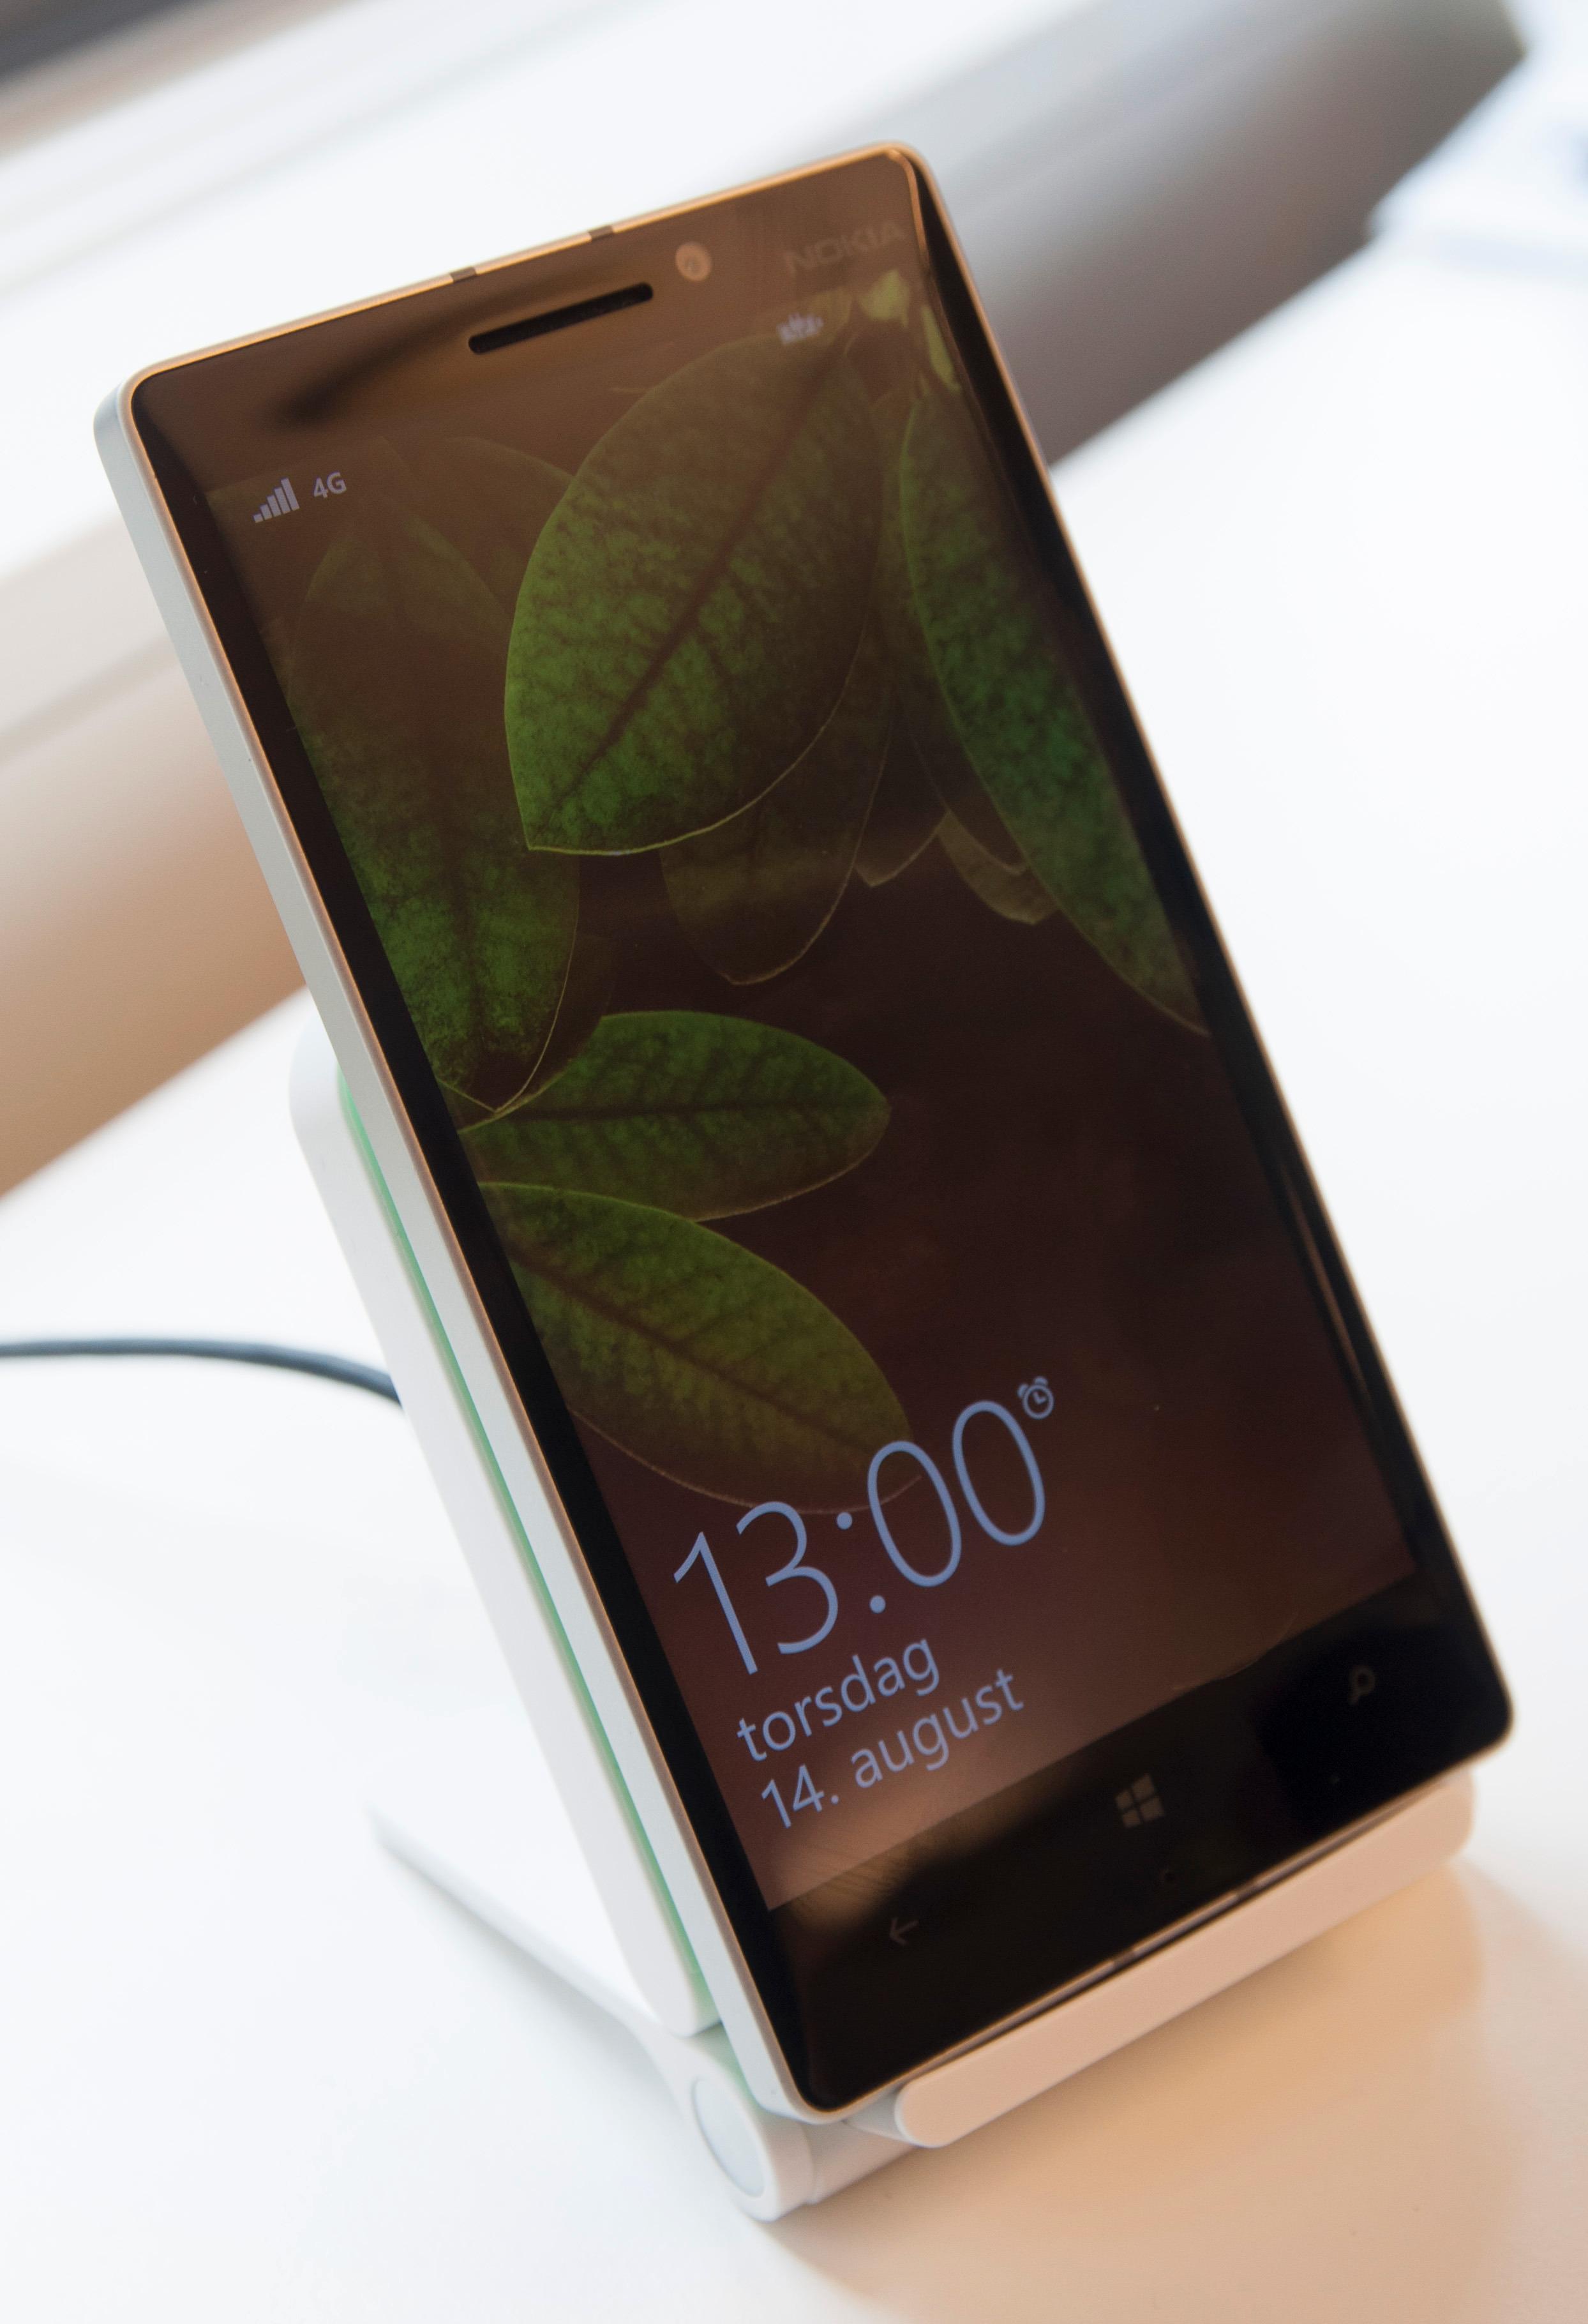 Nokia Lumia 930 er en av modellene med trådløs lading integrert.Foto: Finn Jarle Kvalheim, Amobil.no